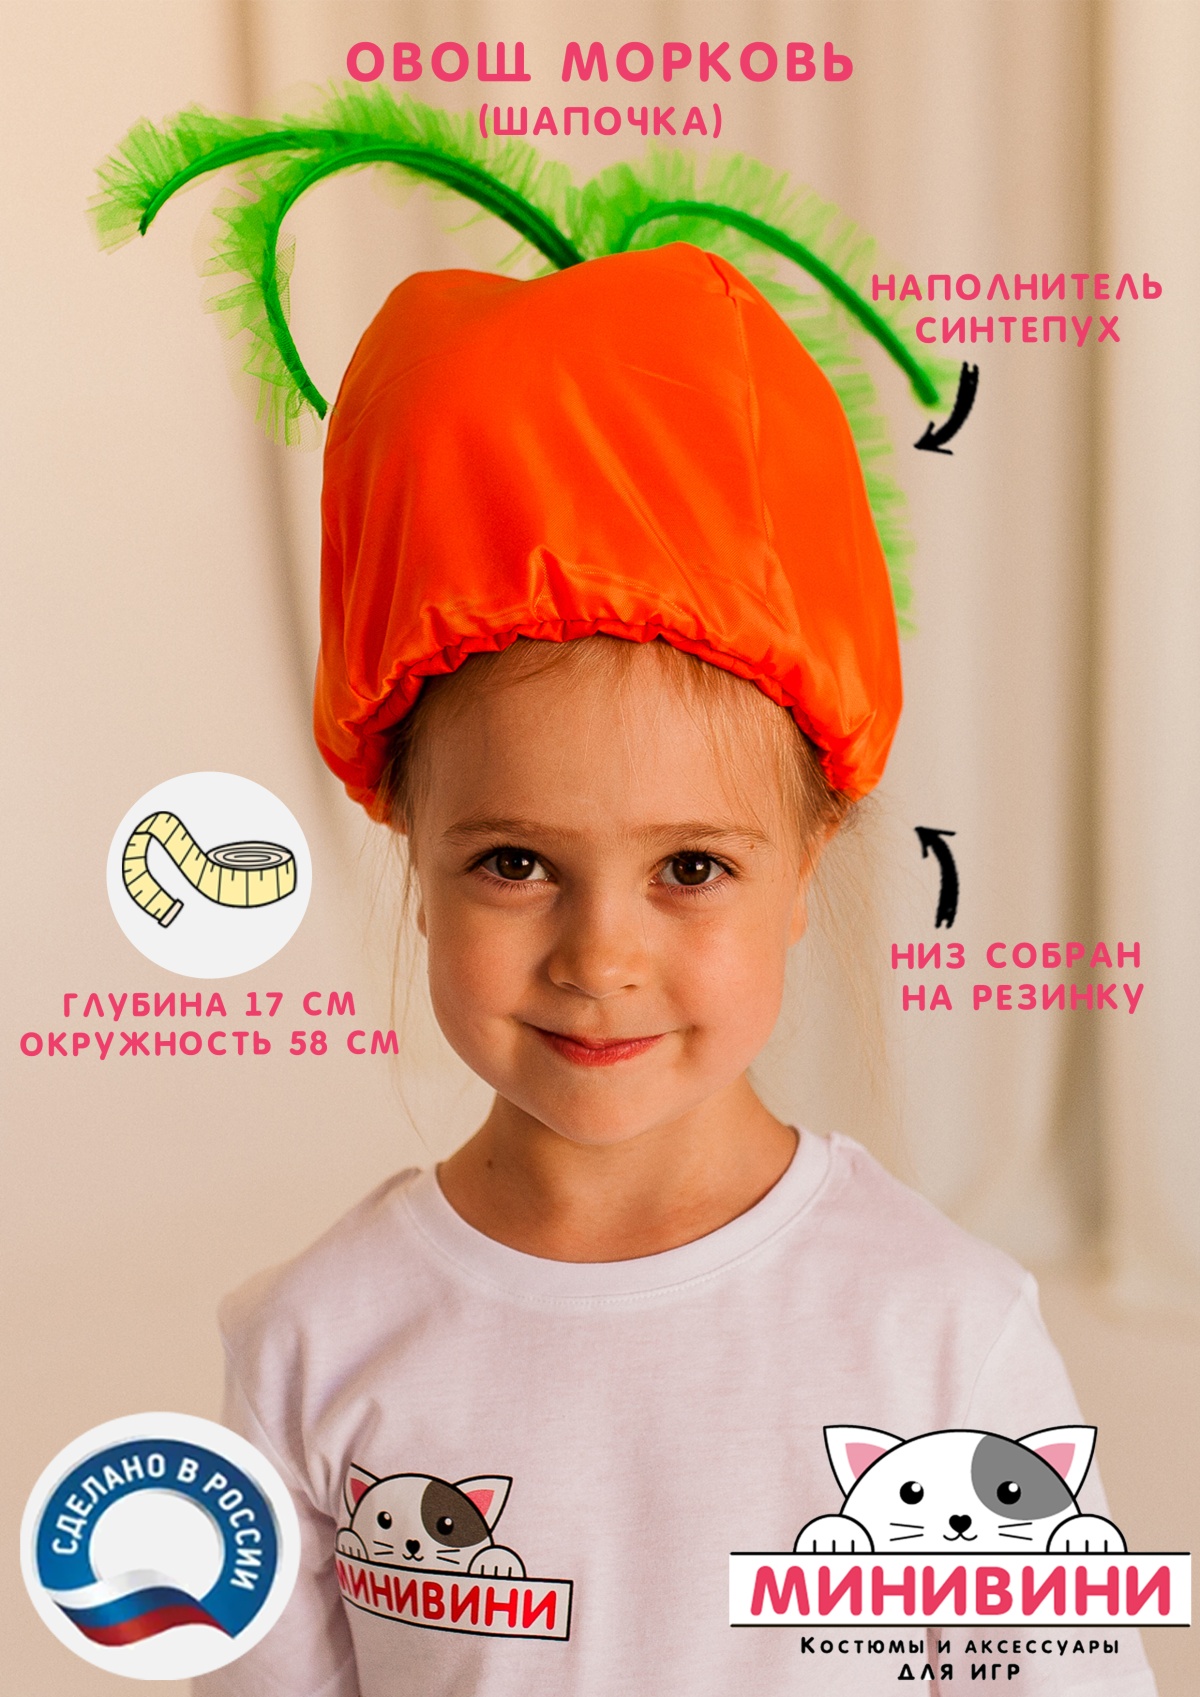 Овощ (шапочка): морковь